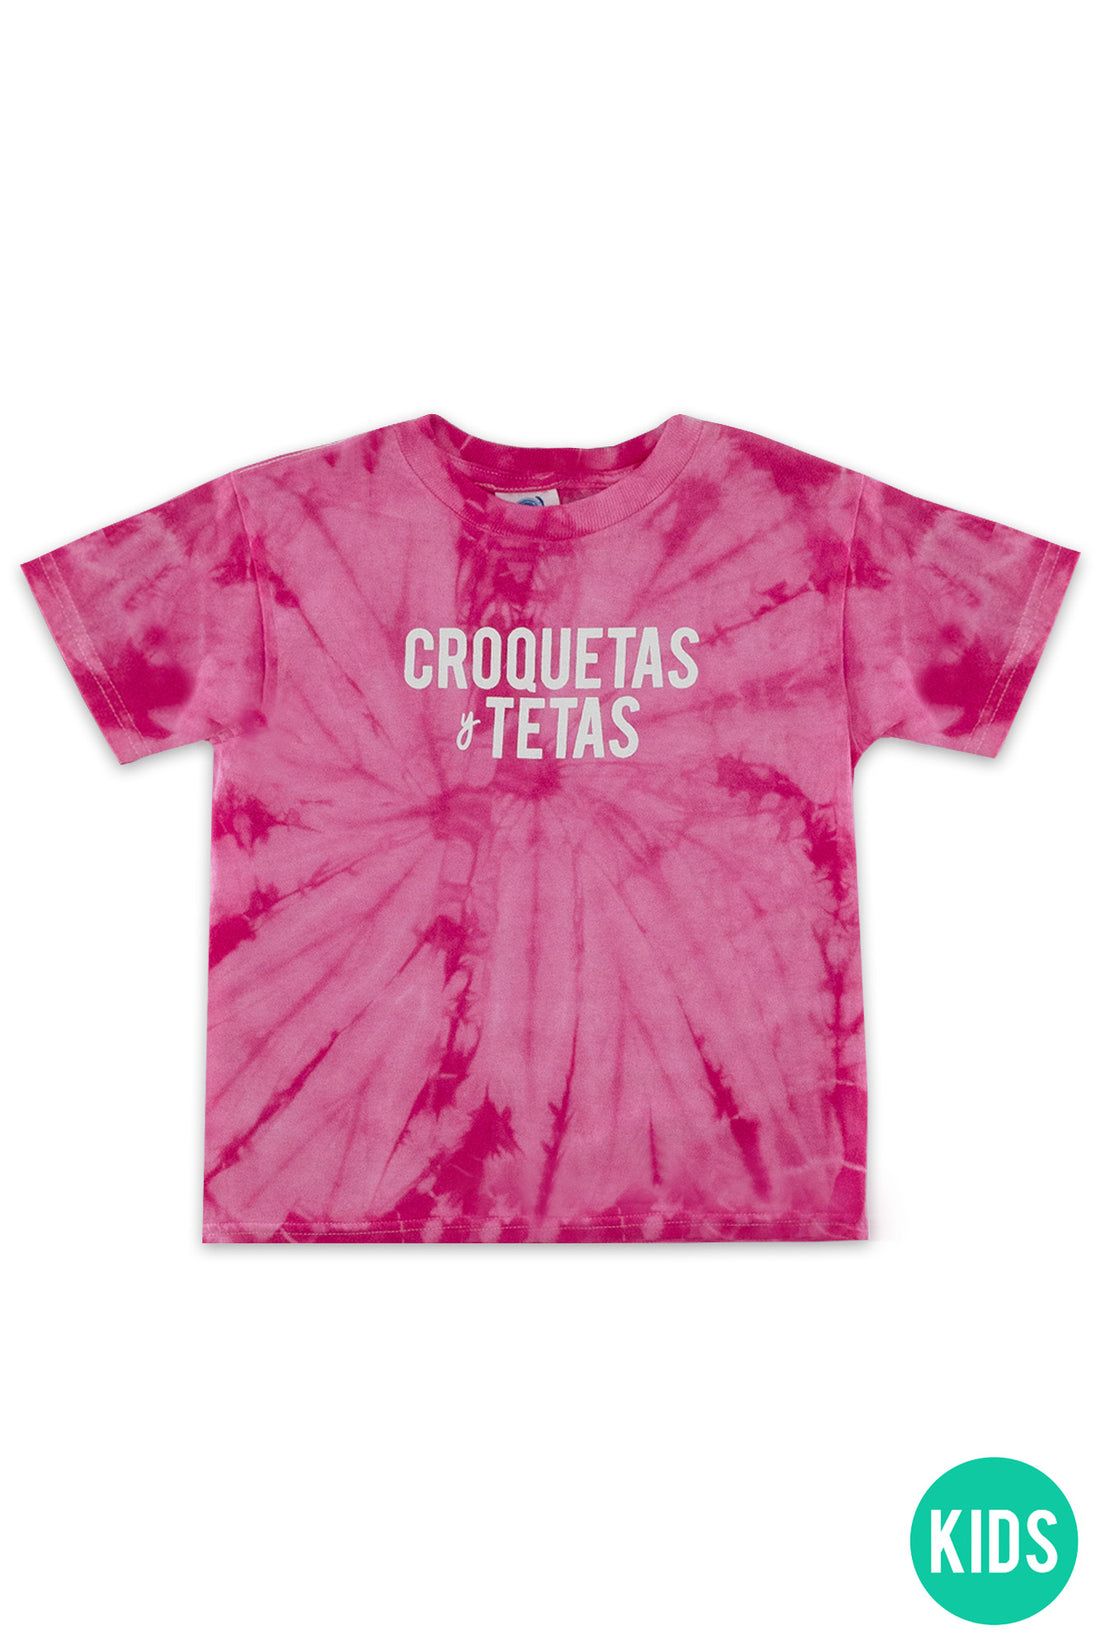 Croquetas y Tetas T-Shirt - Toddler